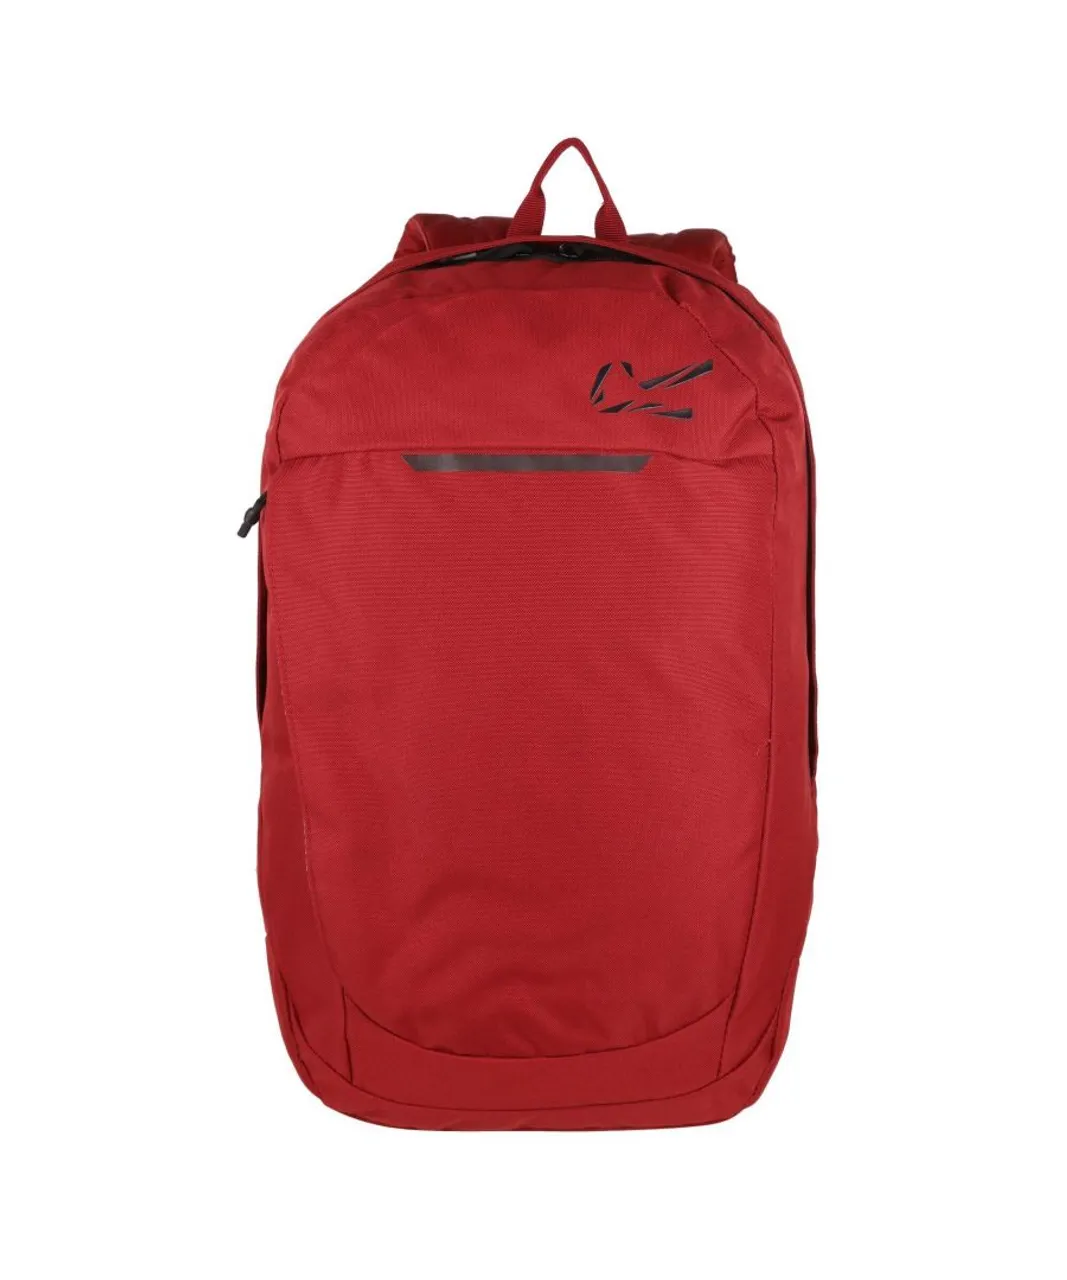 Regatta Unisex Backpack (Delhi Red) - One Size